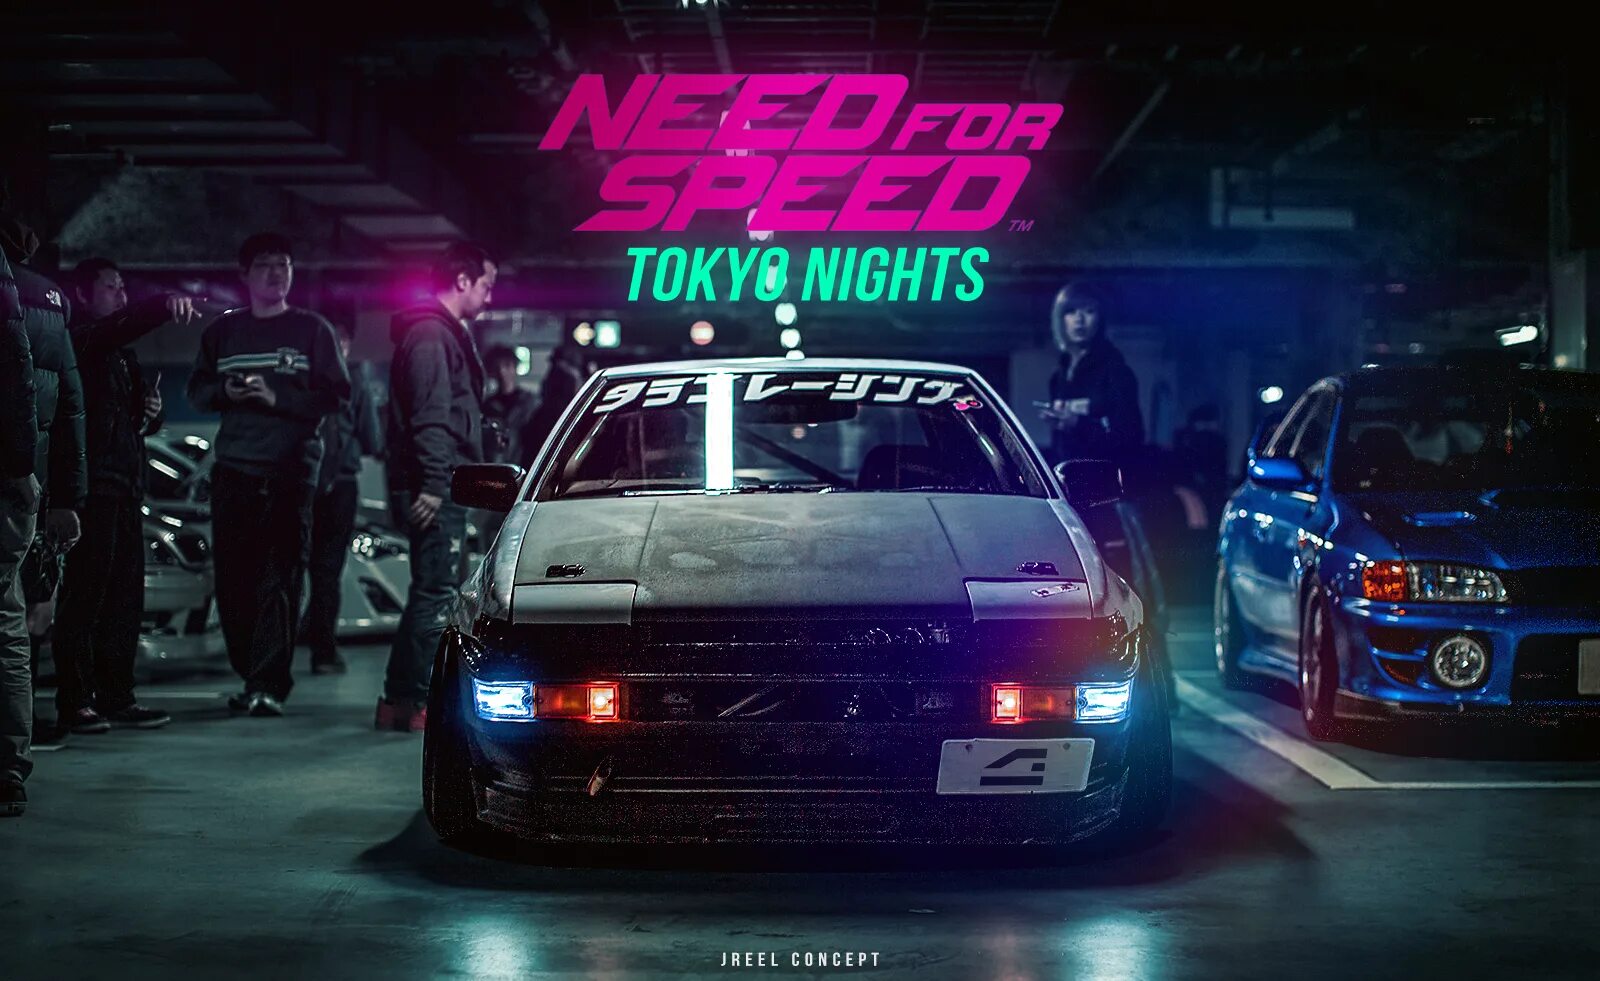 Токио дрифт. Need for Speed Tokyo Nights. Наклейки Токио дрифт. Need for Speed дрифт.